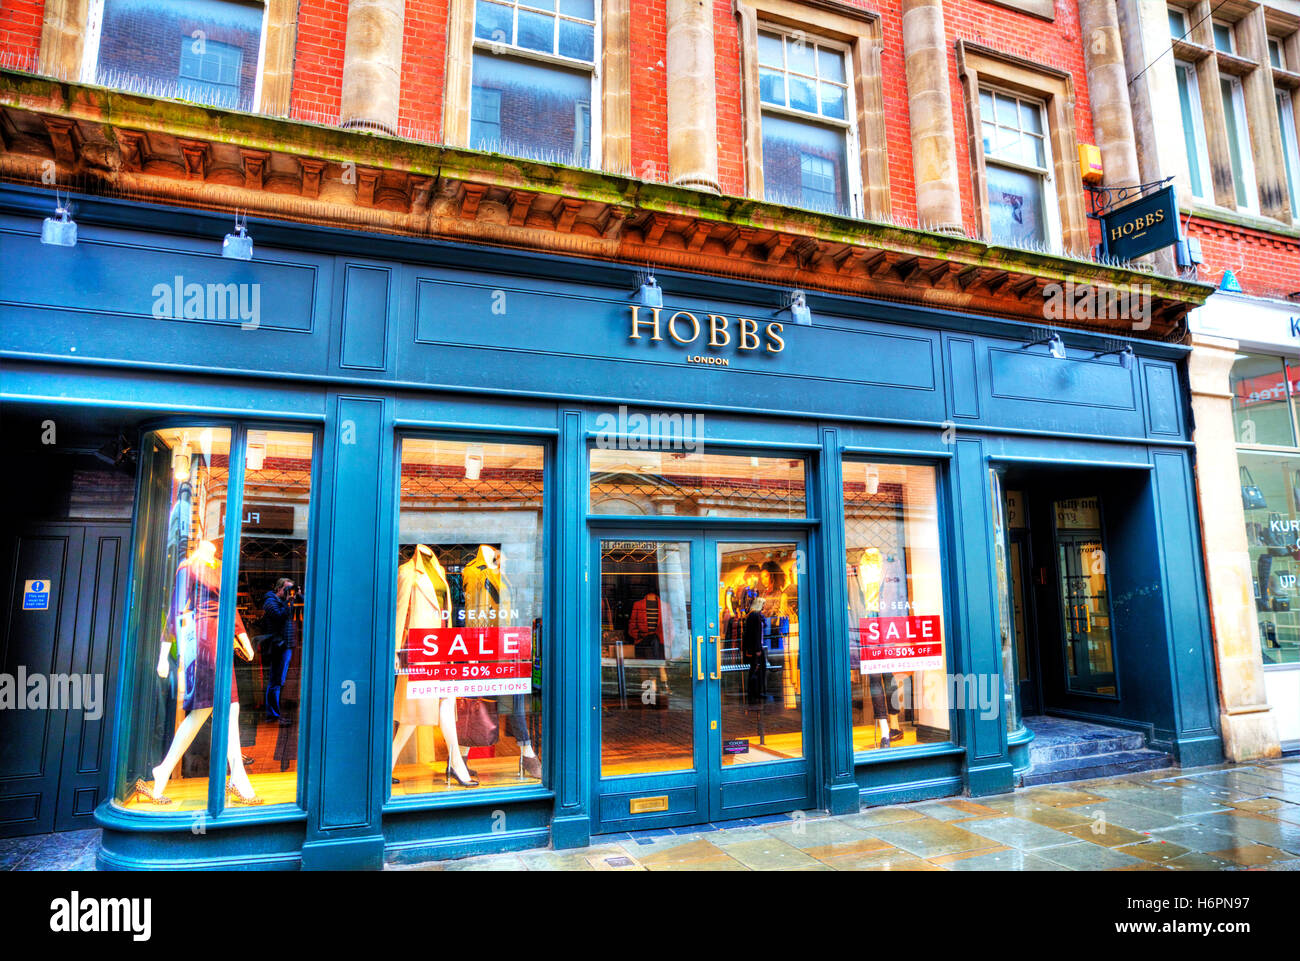 Hobbs fashion London clothes shop clothing store high street shops ...